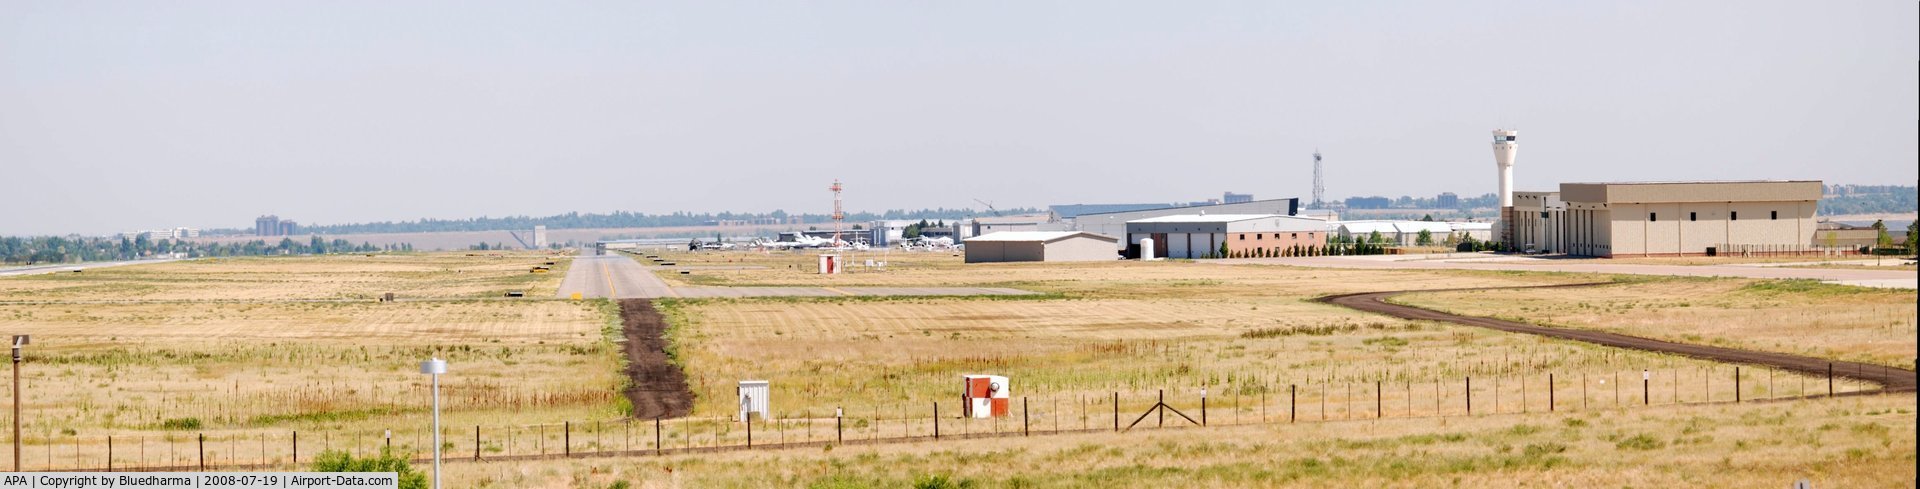 Centennial Airport (APA) - View looking North.